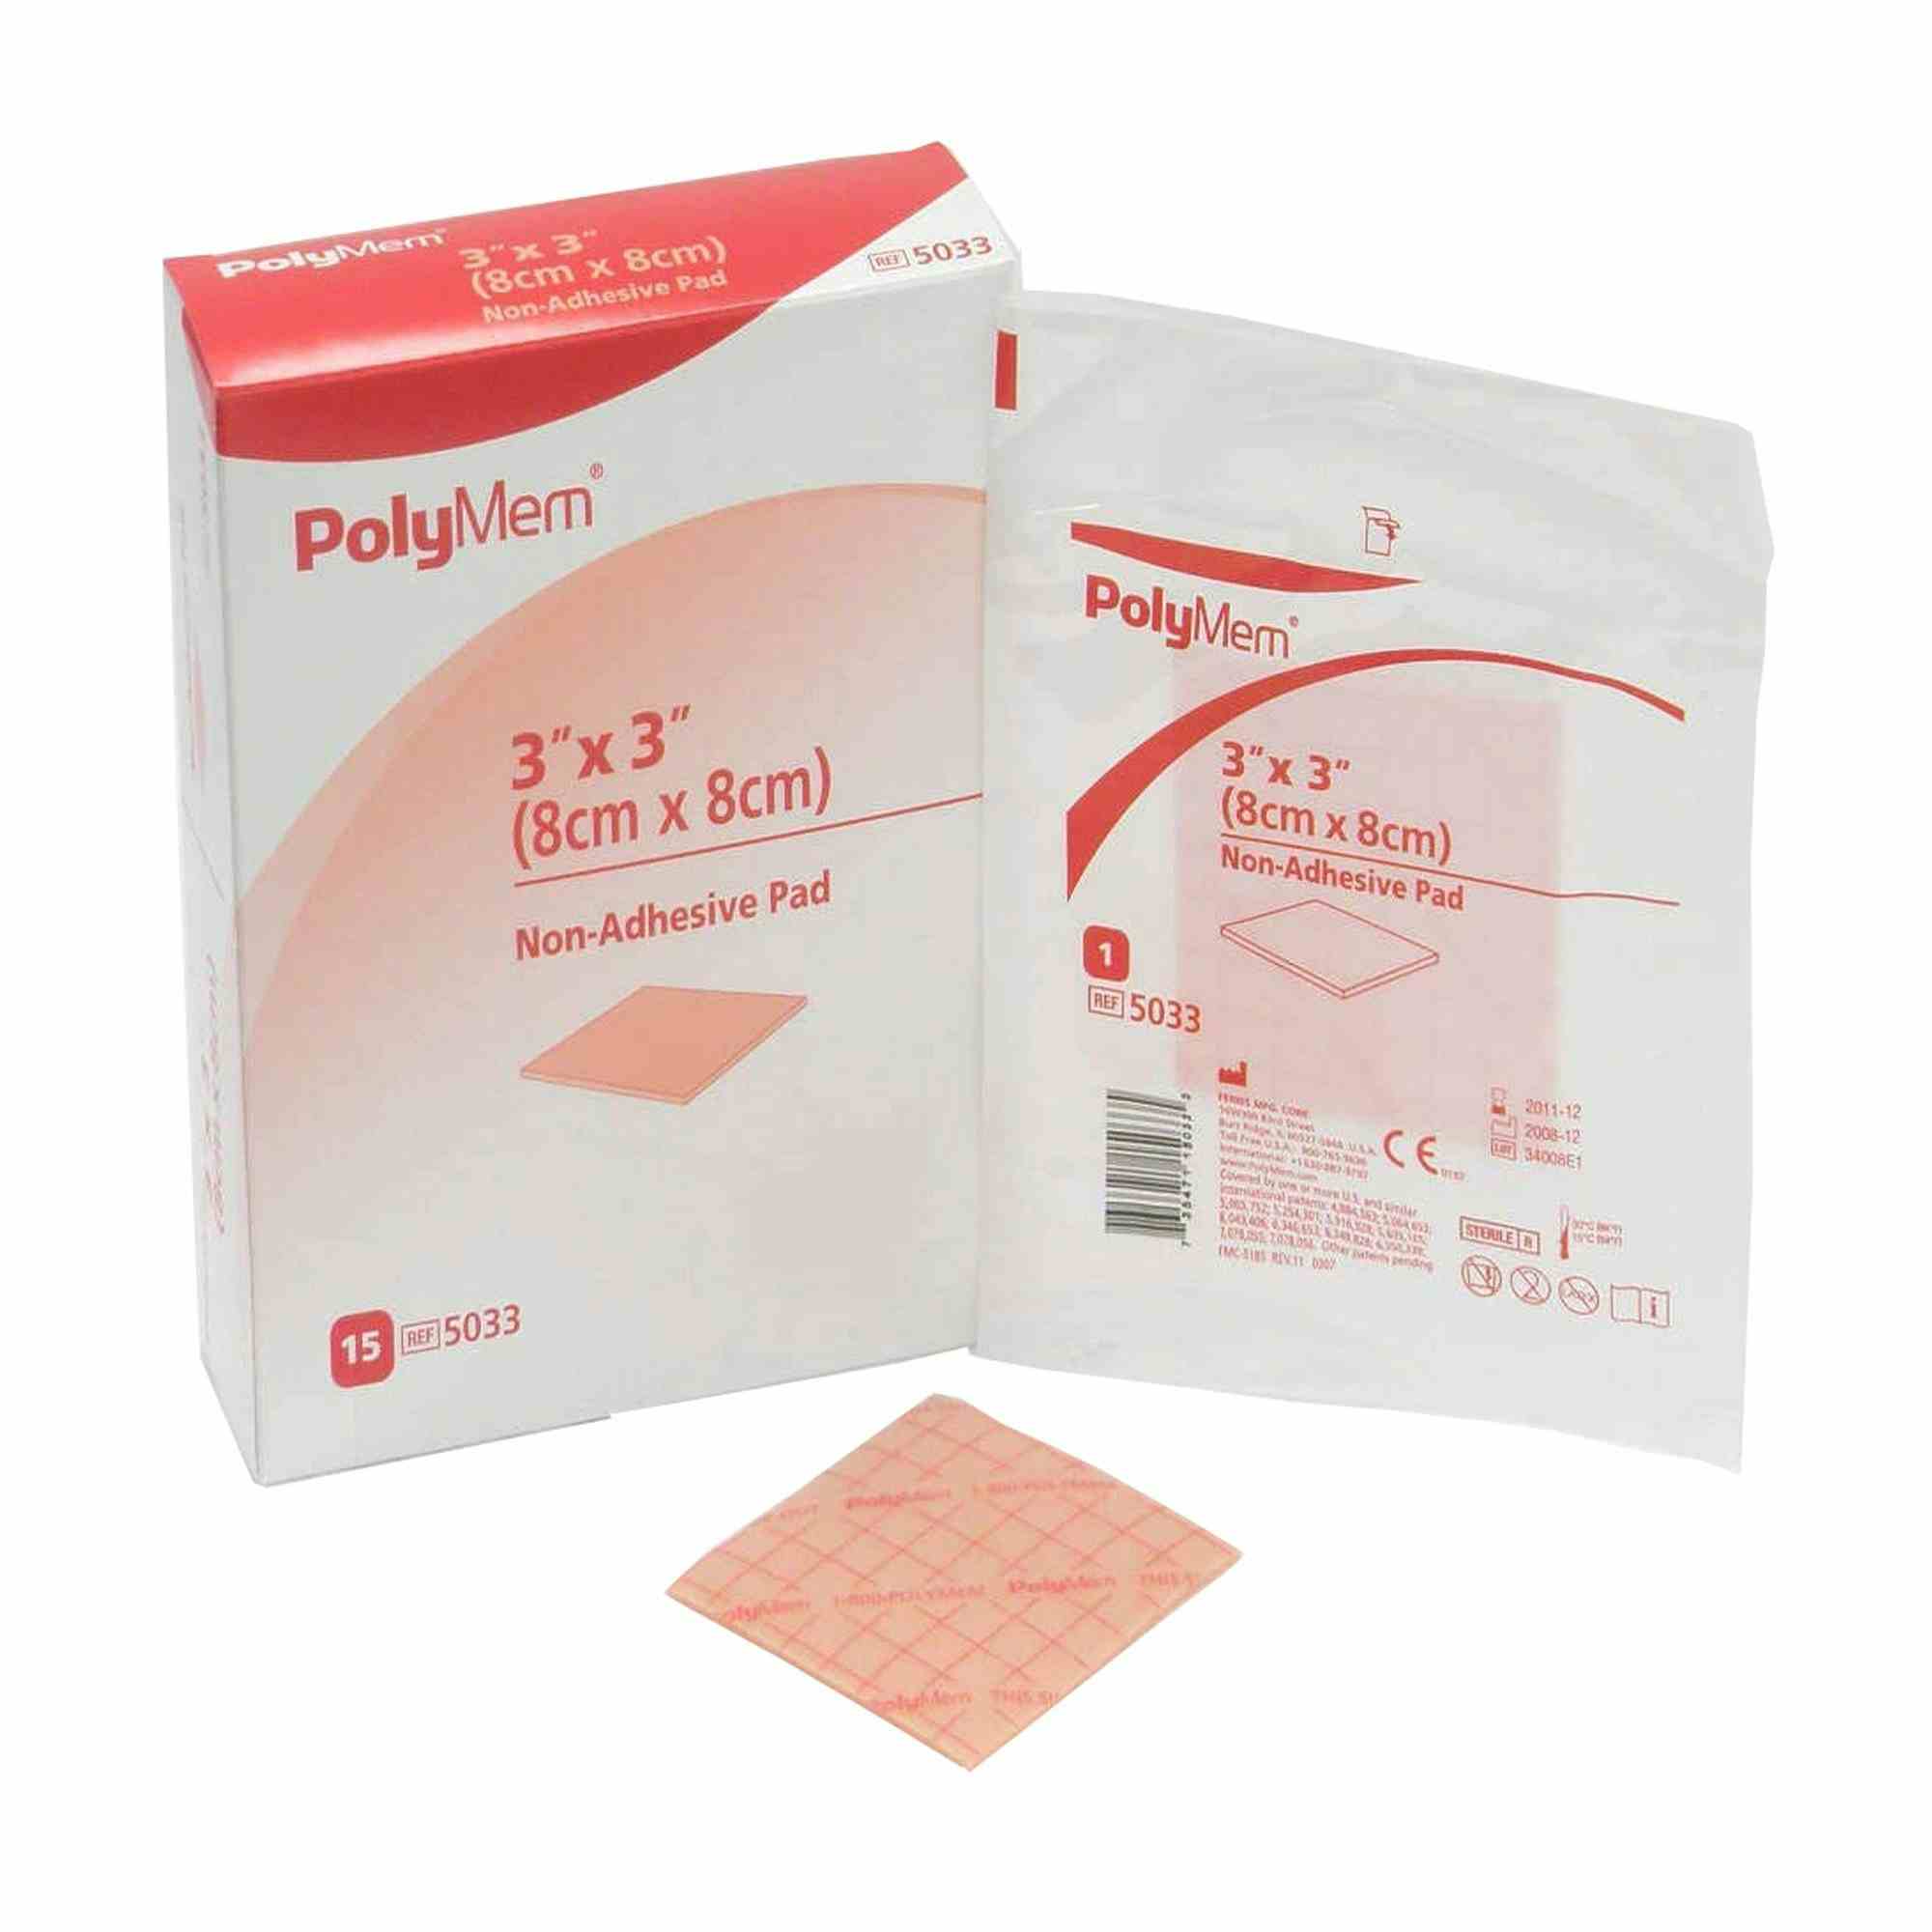 PolyMem Non-Adhesive Pads, 3 X 3", 5033, Box of 15